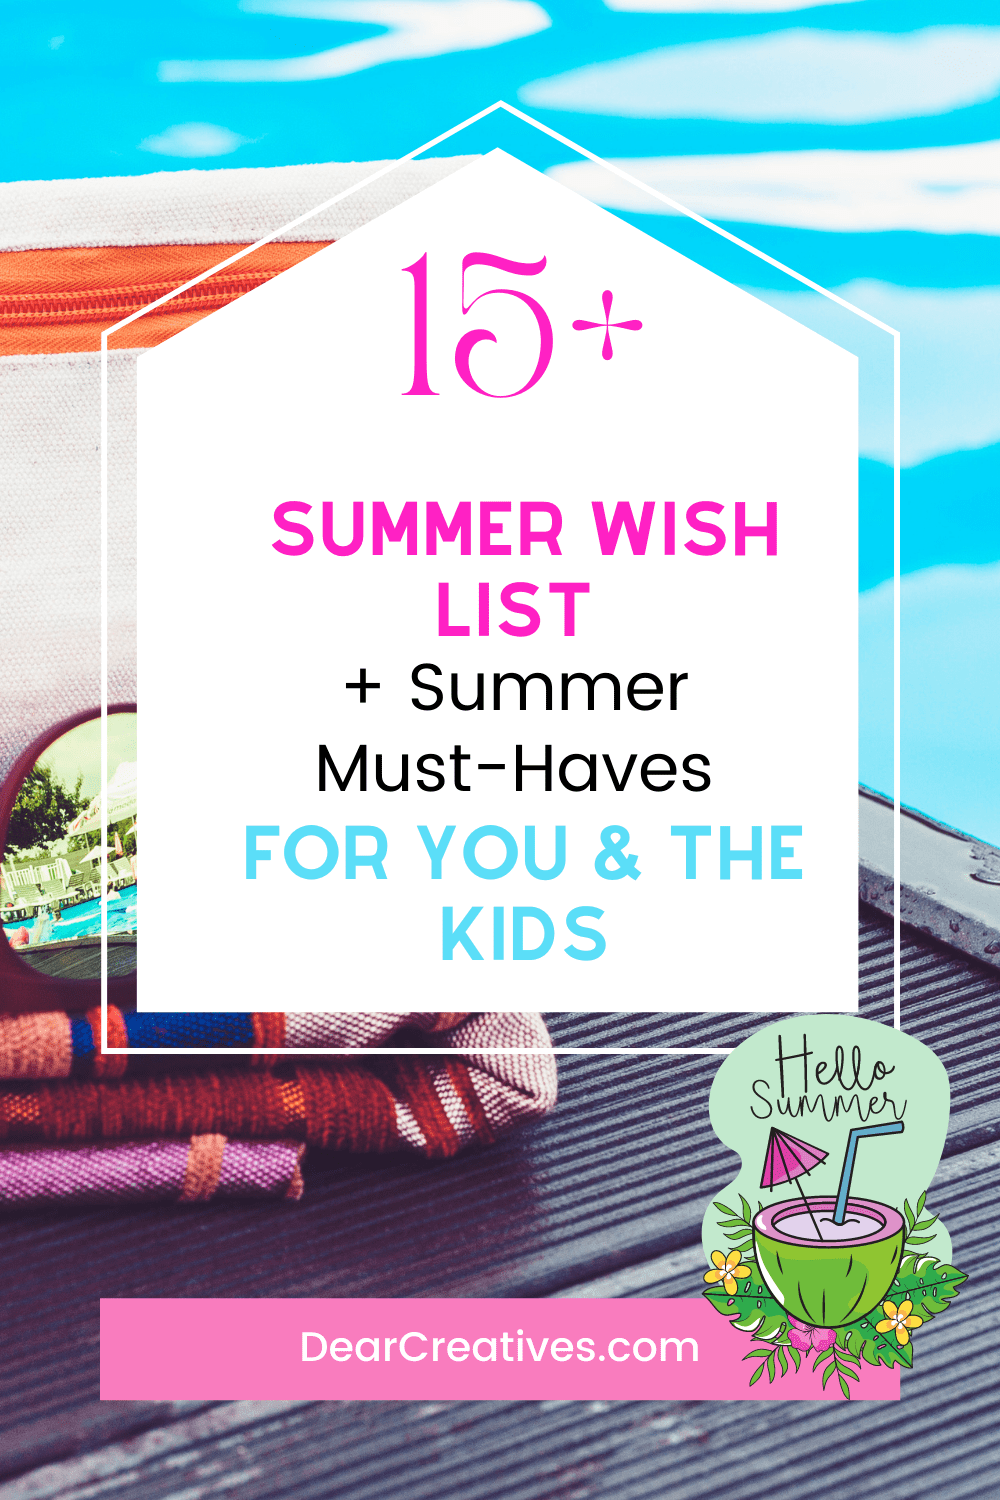 Summer Wish List 12+ Summer Must-Haves